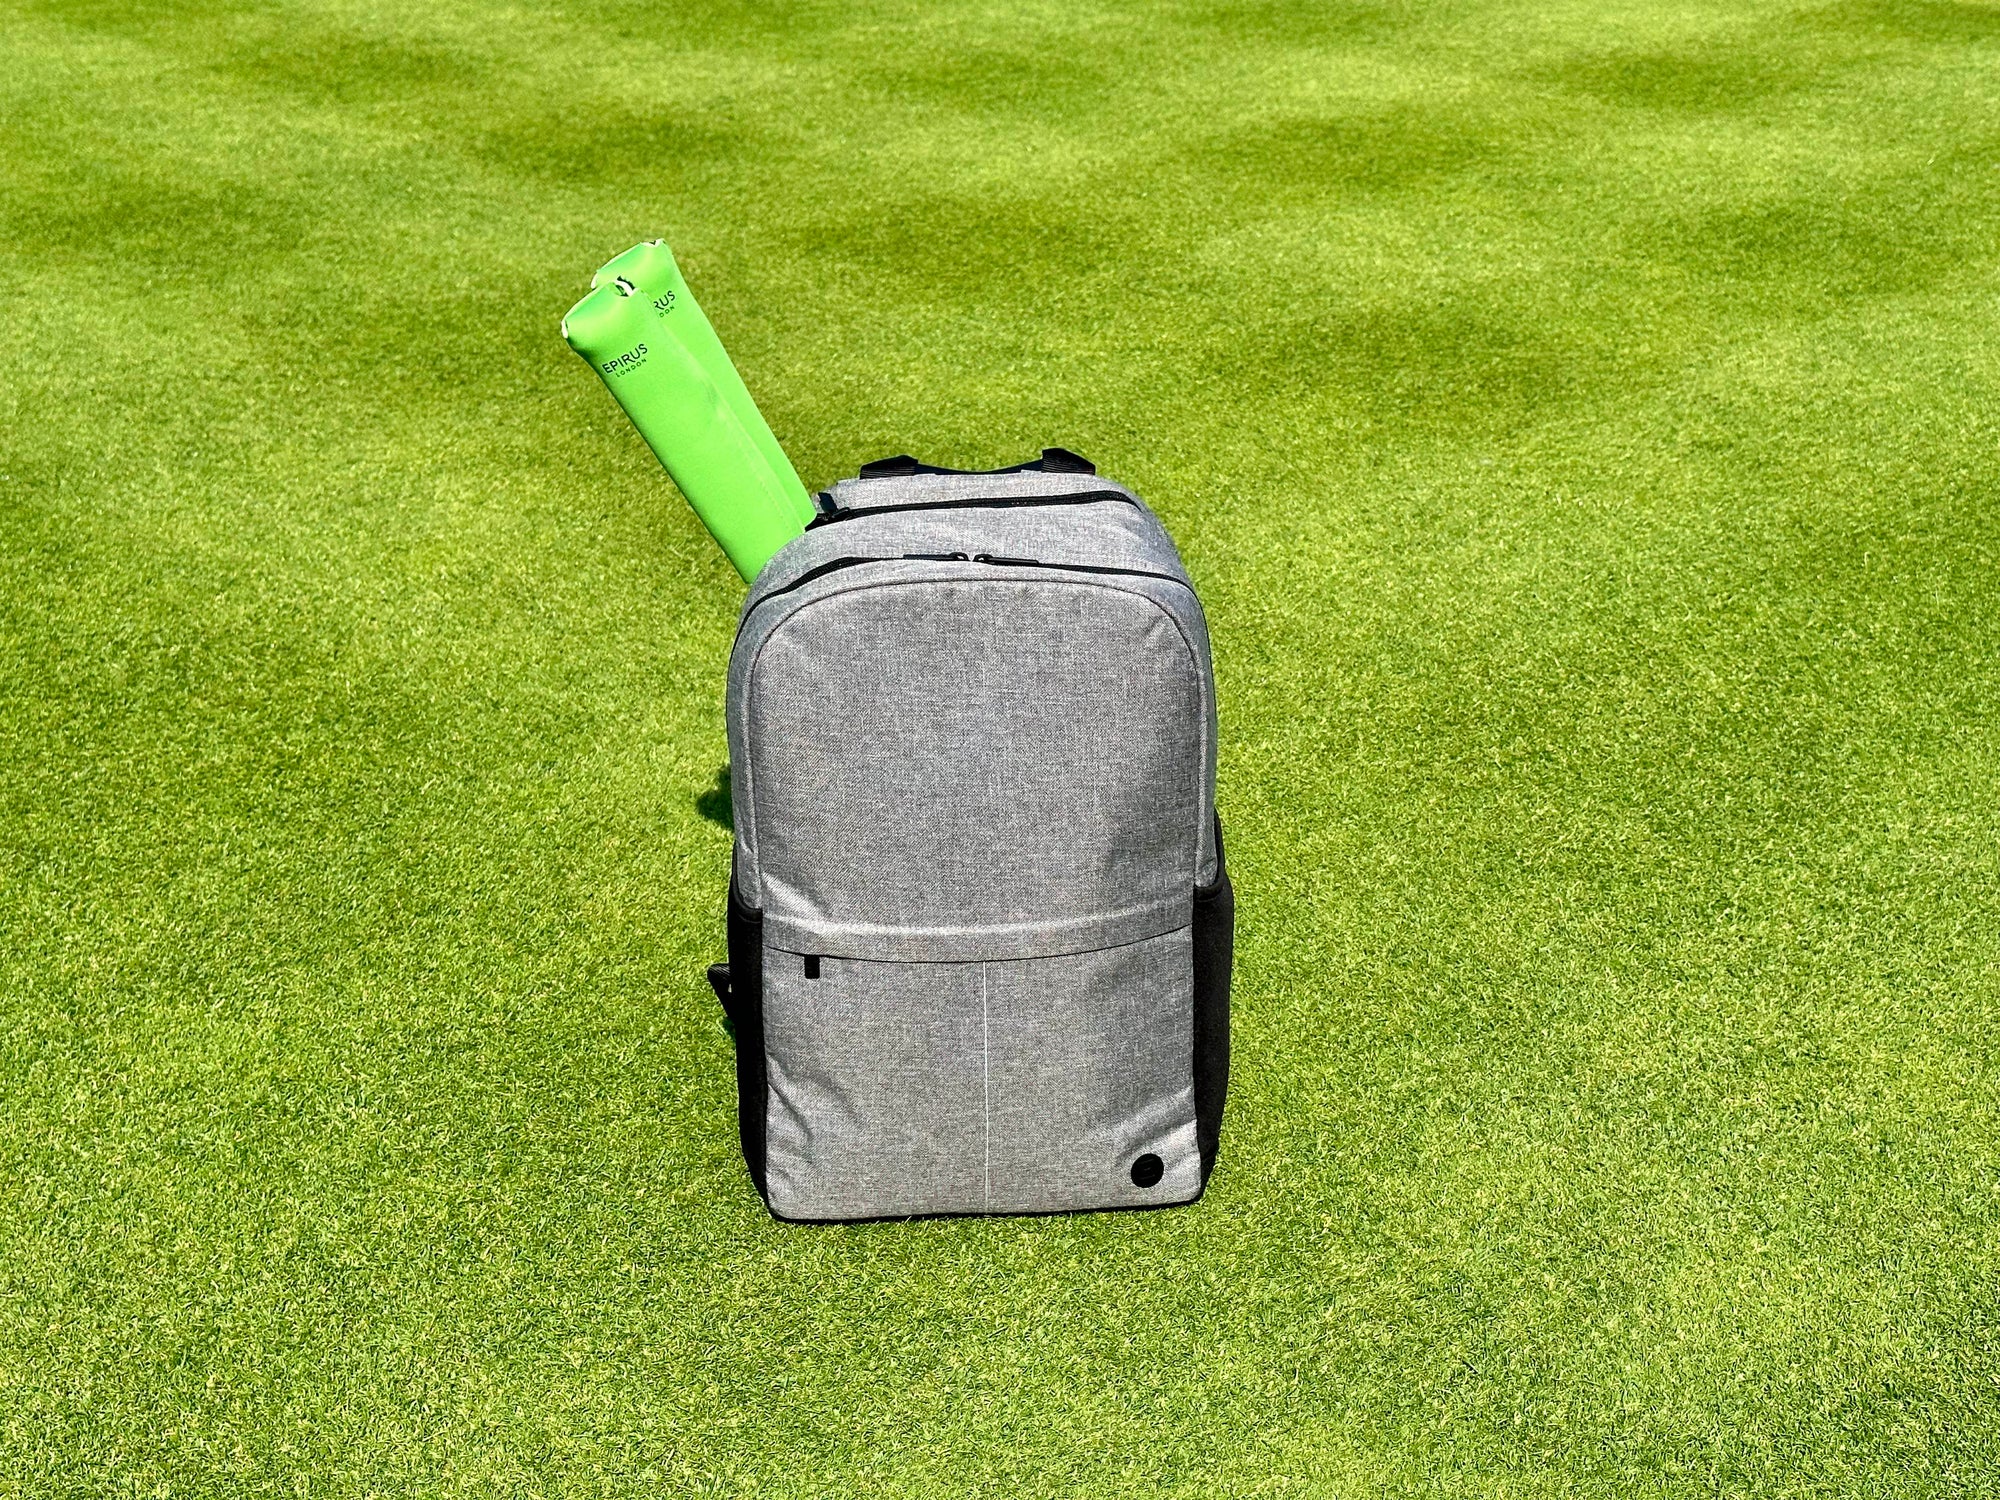 Grey Borderless Backpack v2 with neon green neoprene grip covers